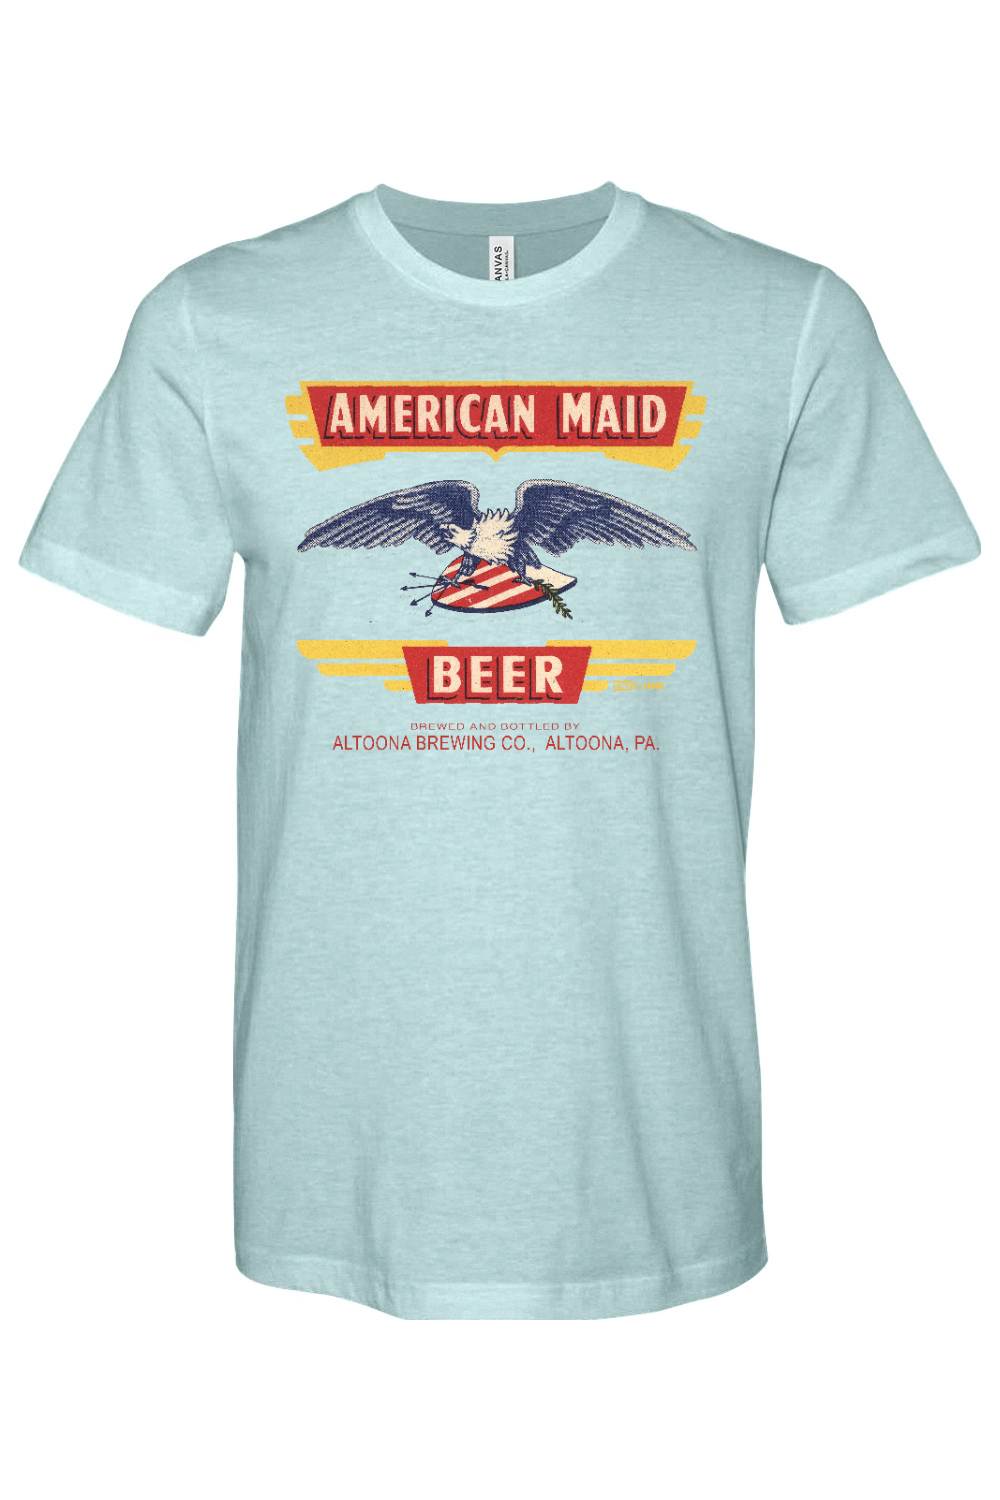 American Maid Beer - Altoona, PA - Yinzylvania